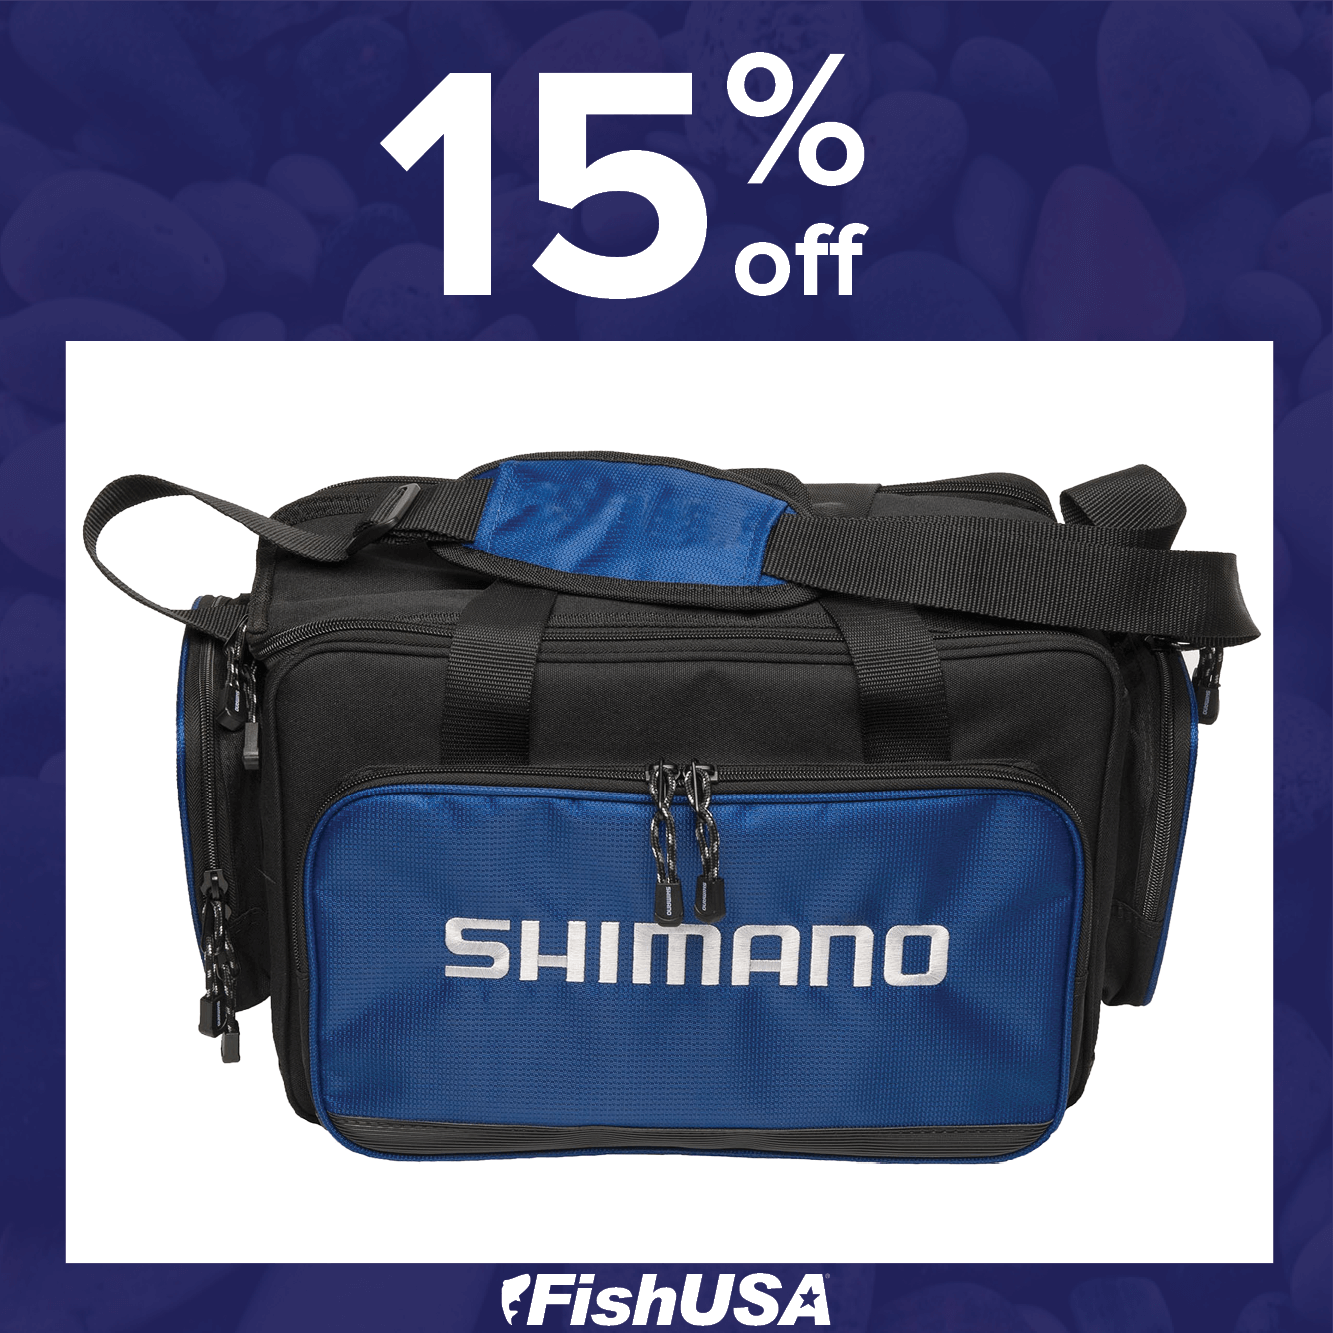 15% off Shimano Baltica Tackle Bag